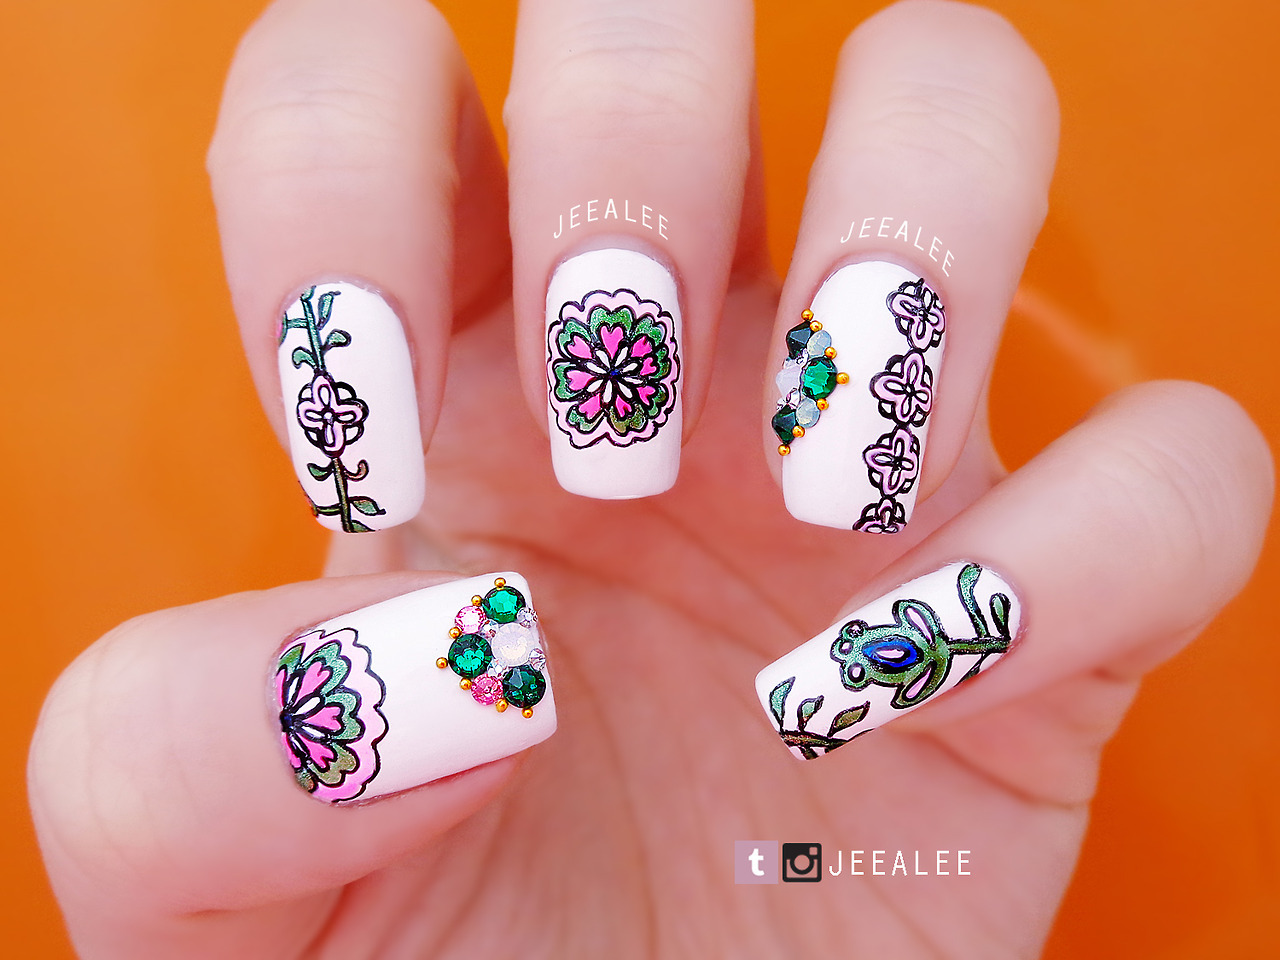 5. Hannah Lee's Nail Art Designs on Tumblr - wide 10